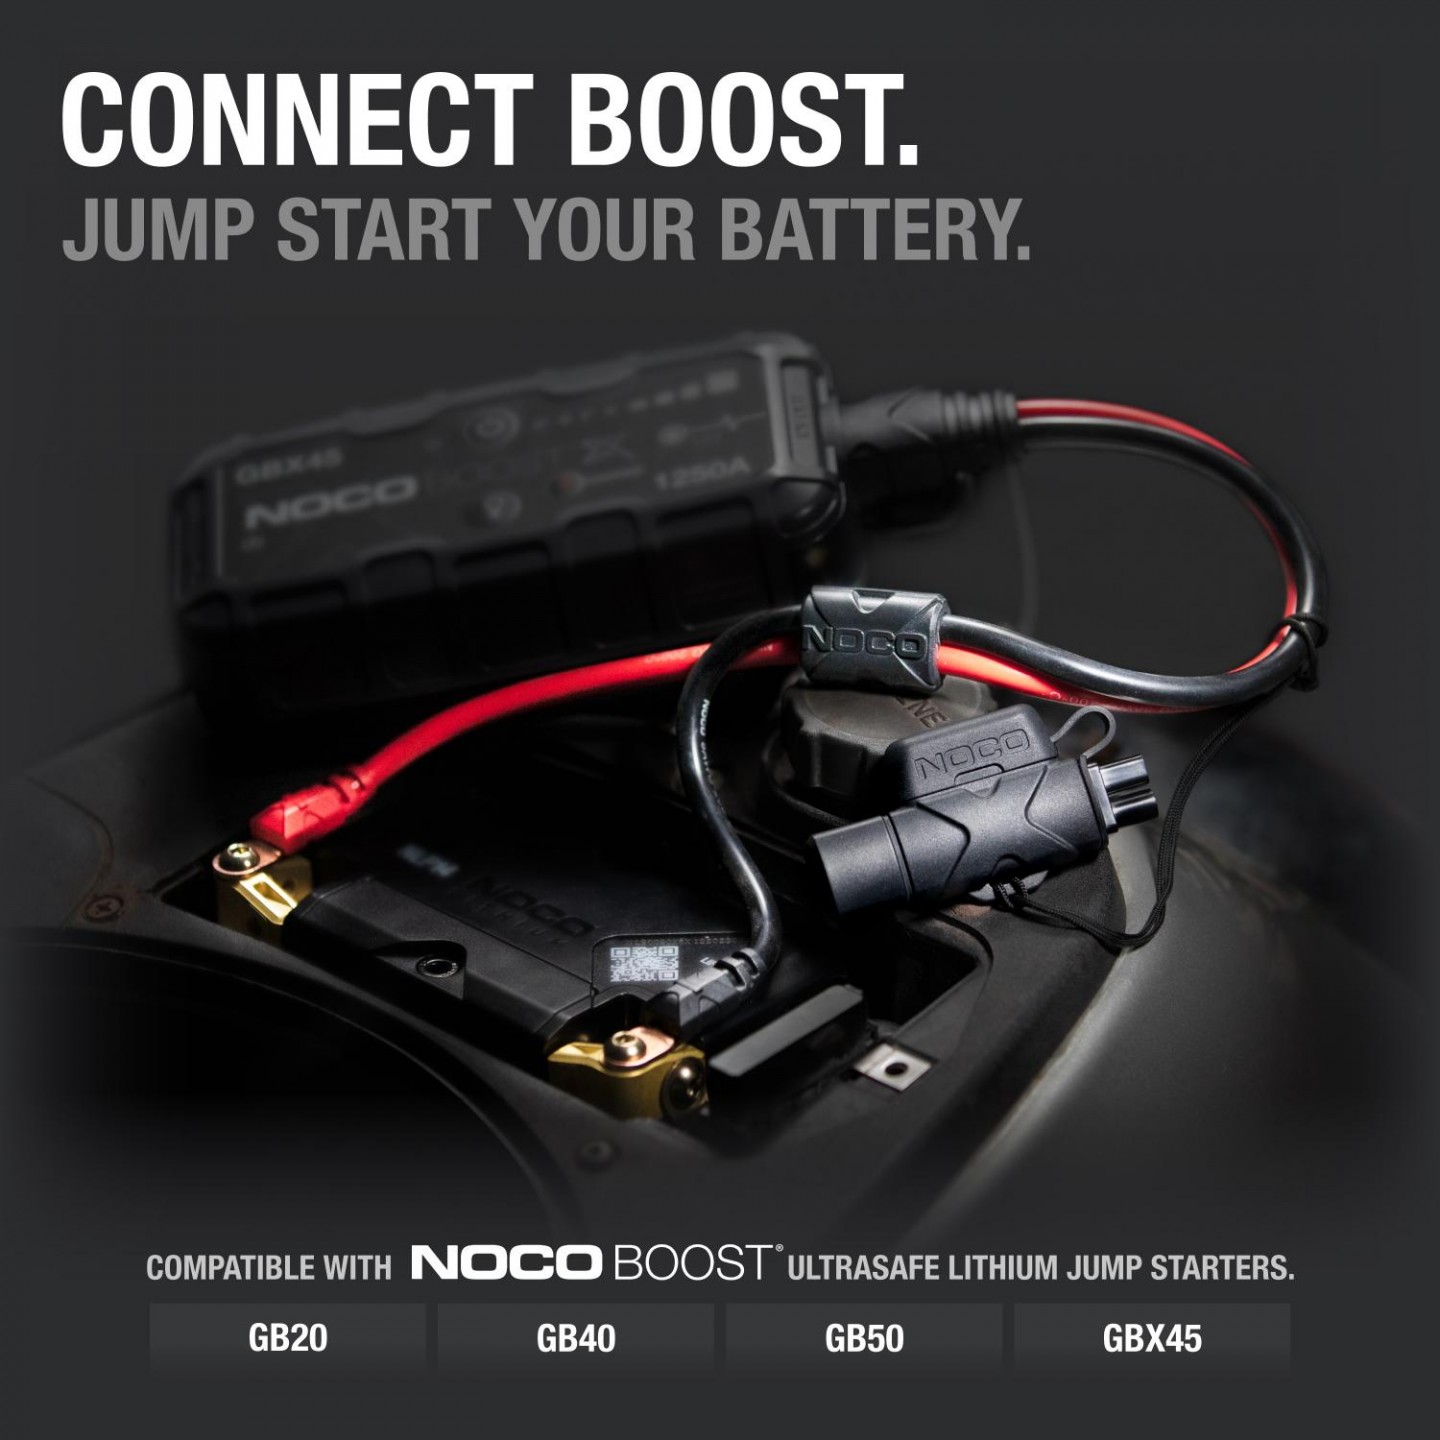 NOCO Genius GB20 Boost Plus 500A UltraSafe Lithium Jump Starter